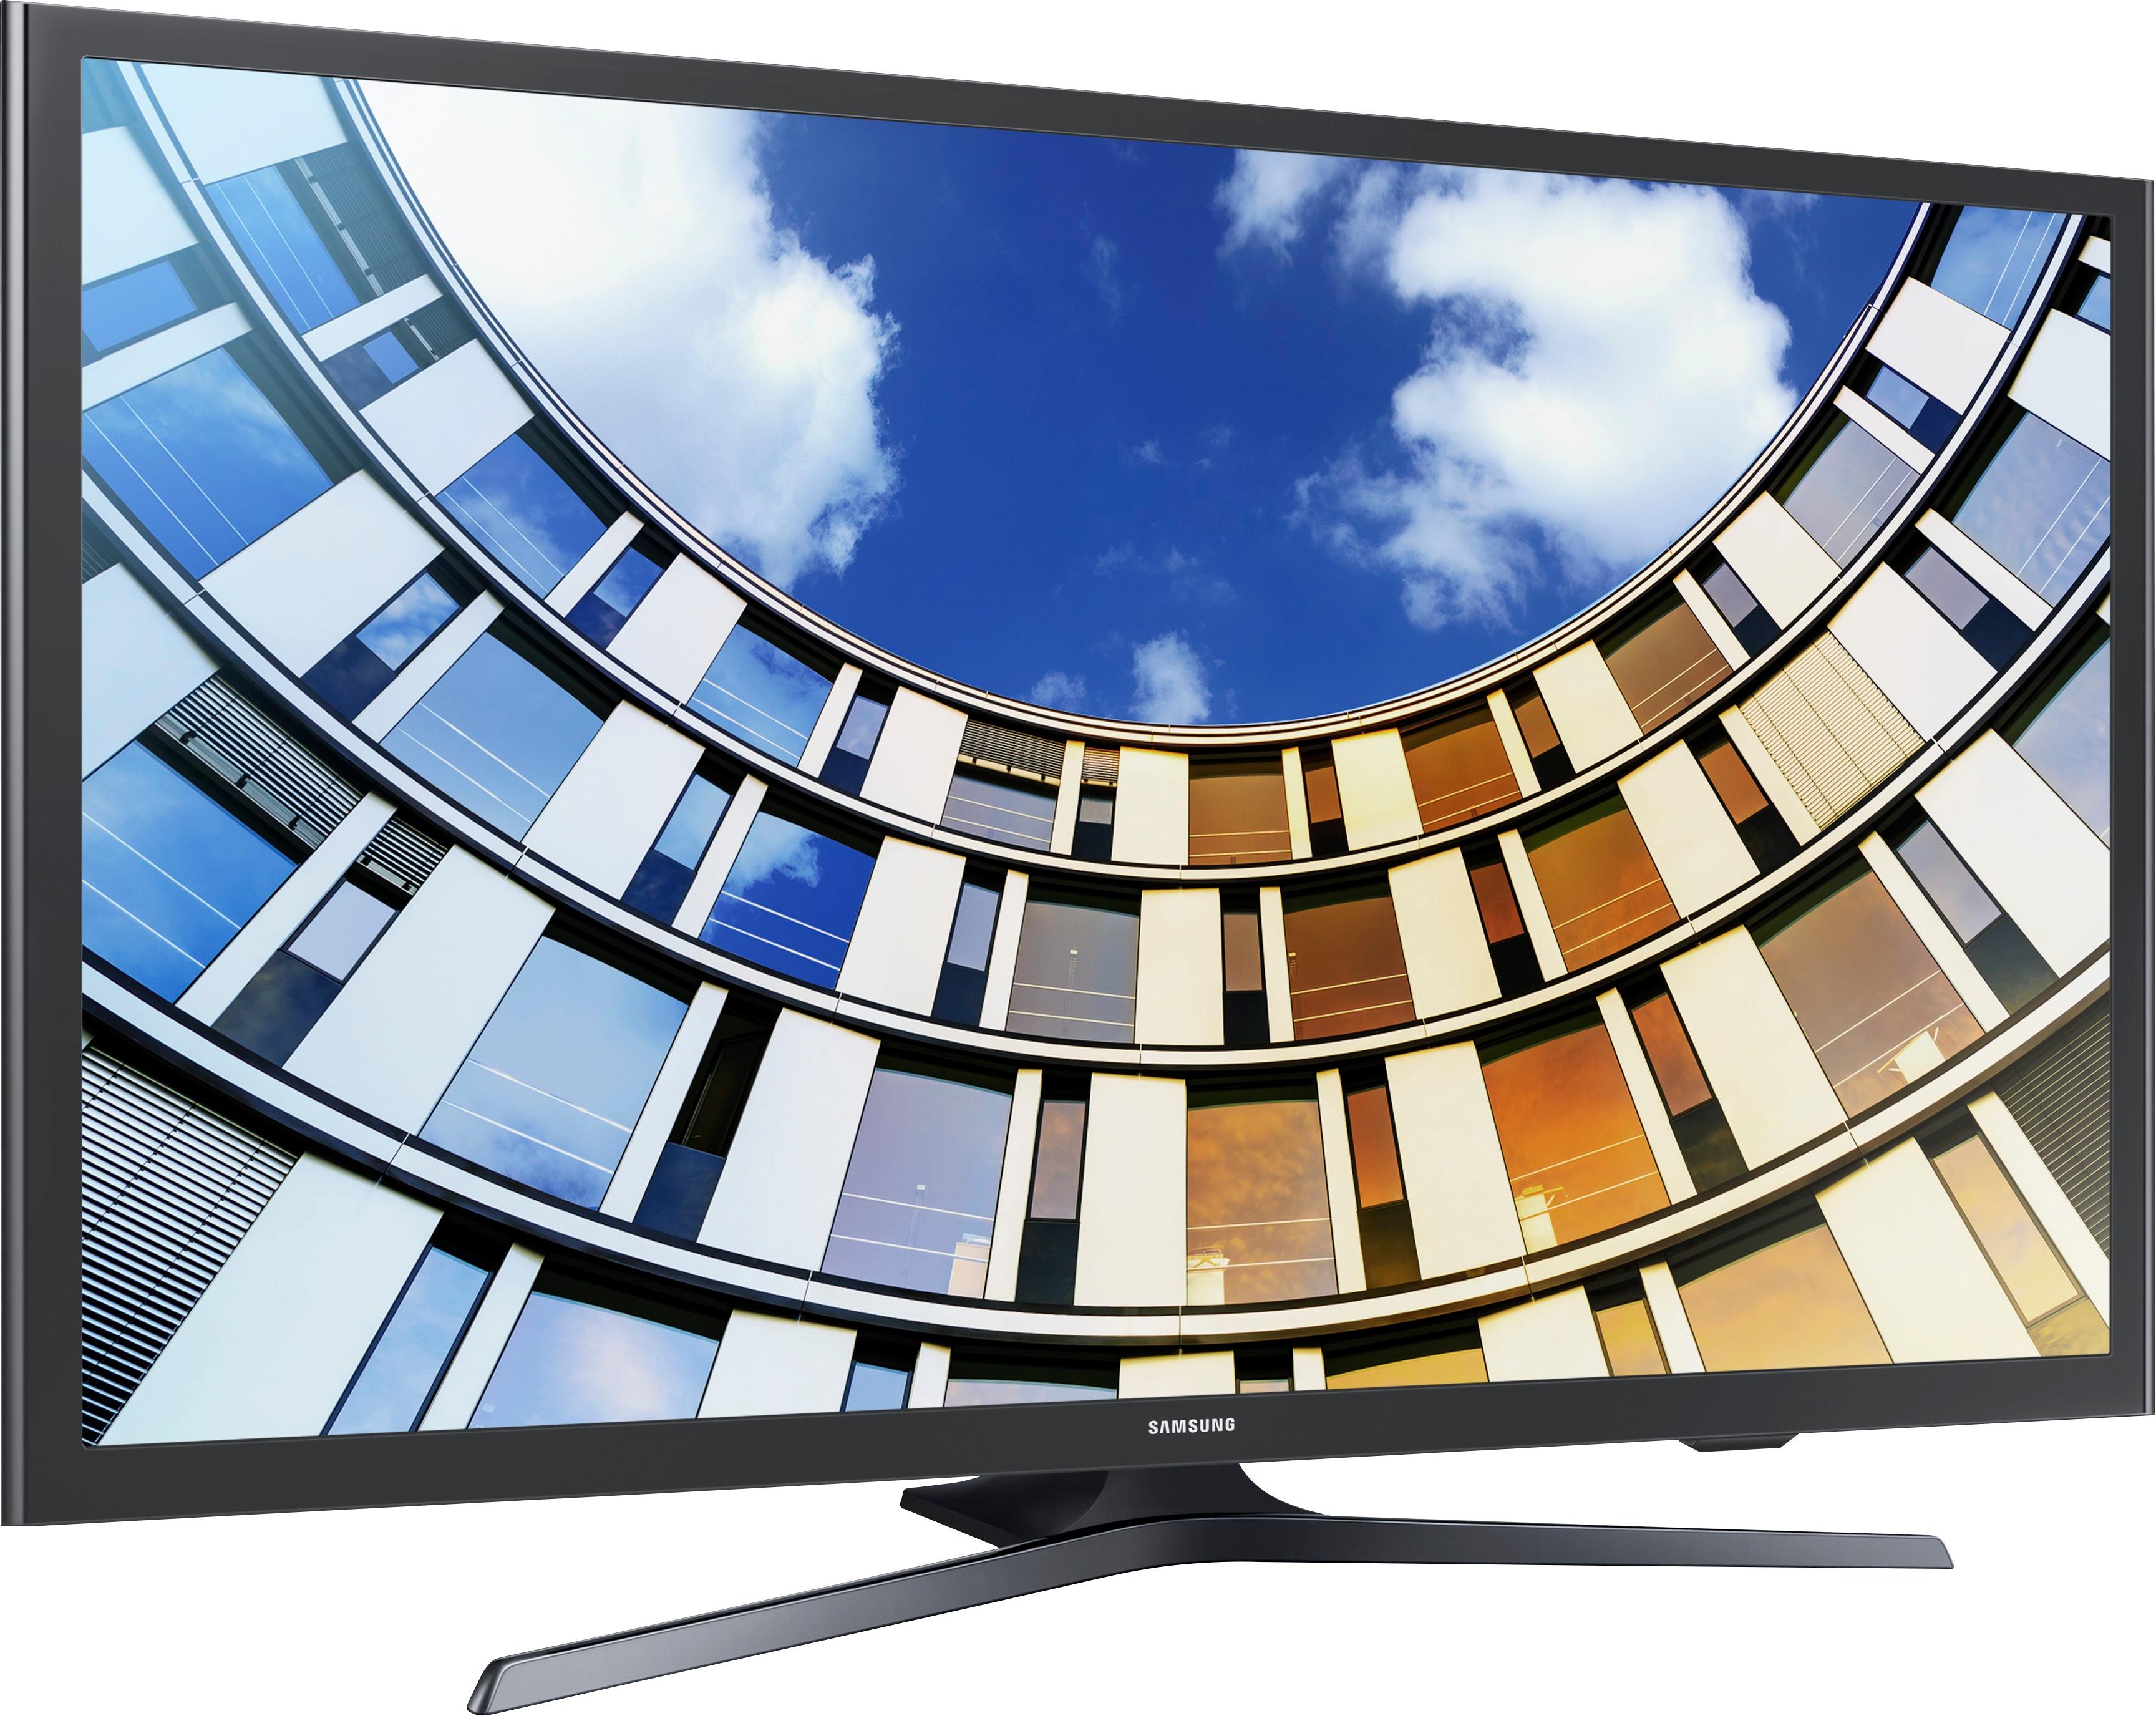 SAMSUNG LED TV COMPLETE PARTS REPAIR SET FROM UN32J5205